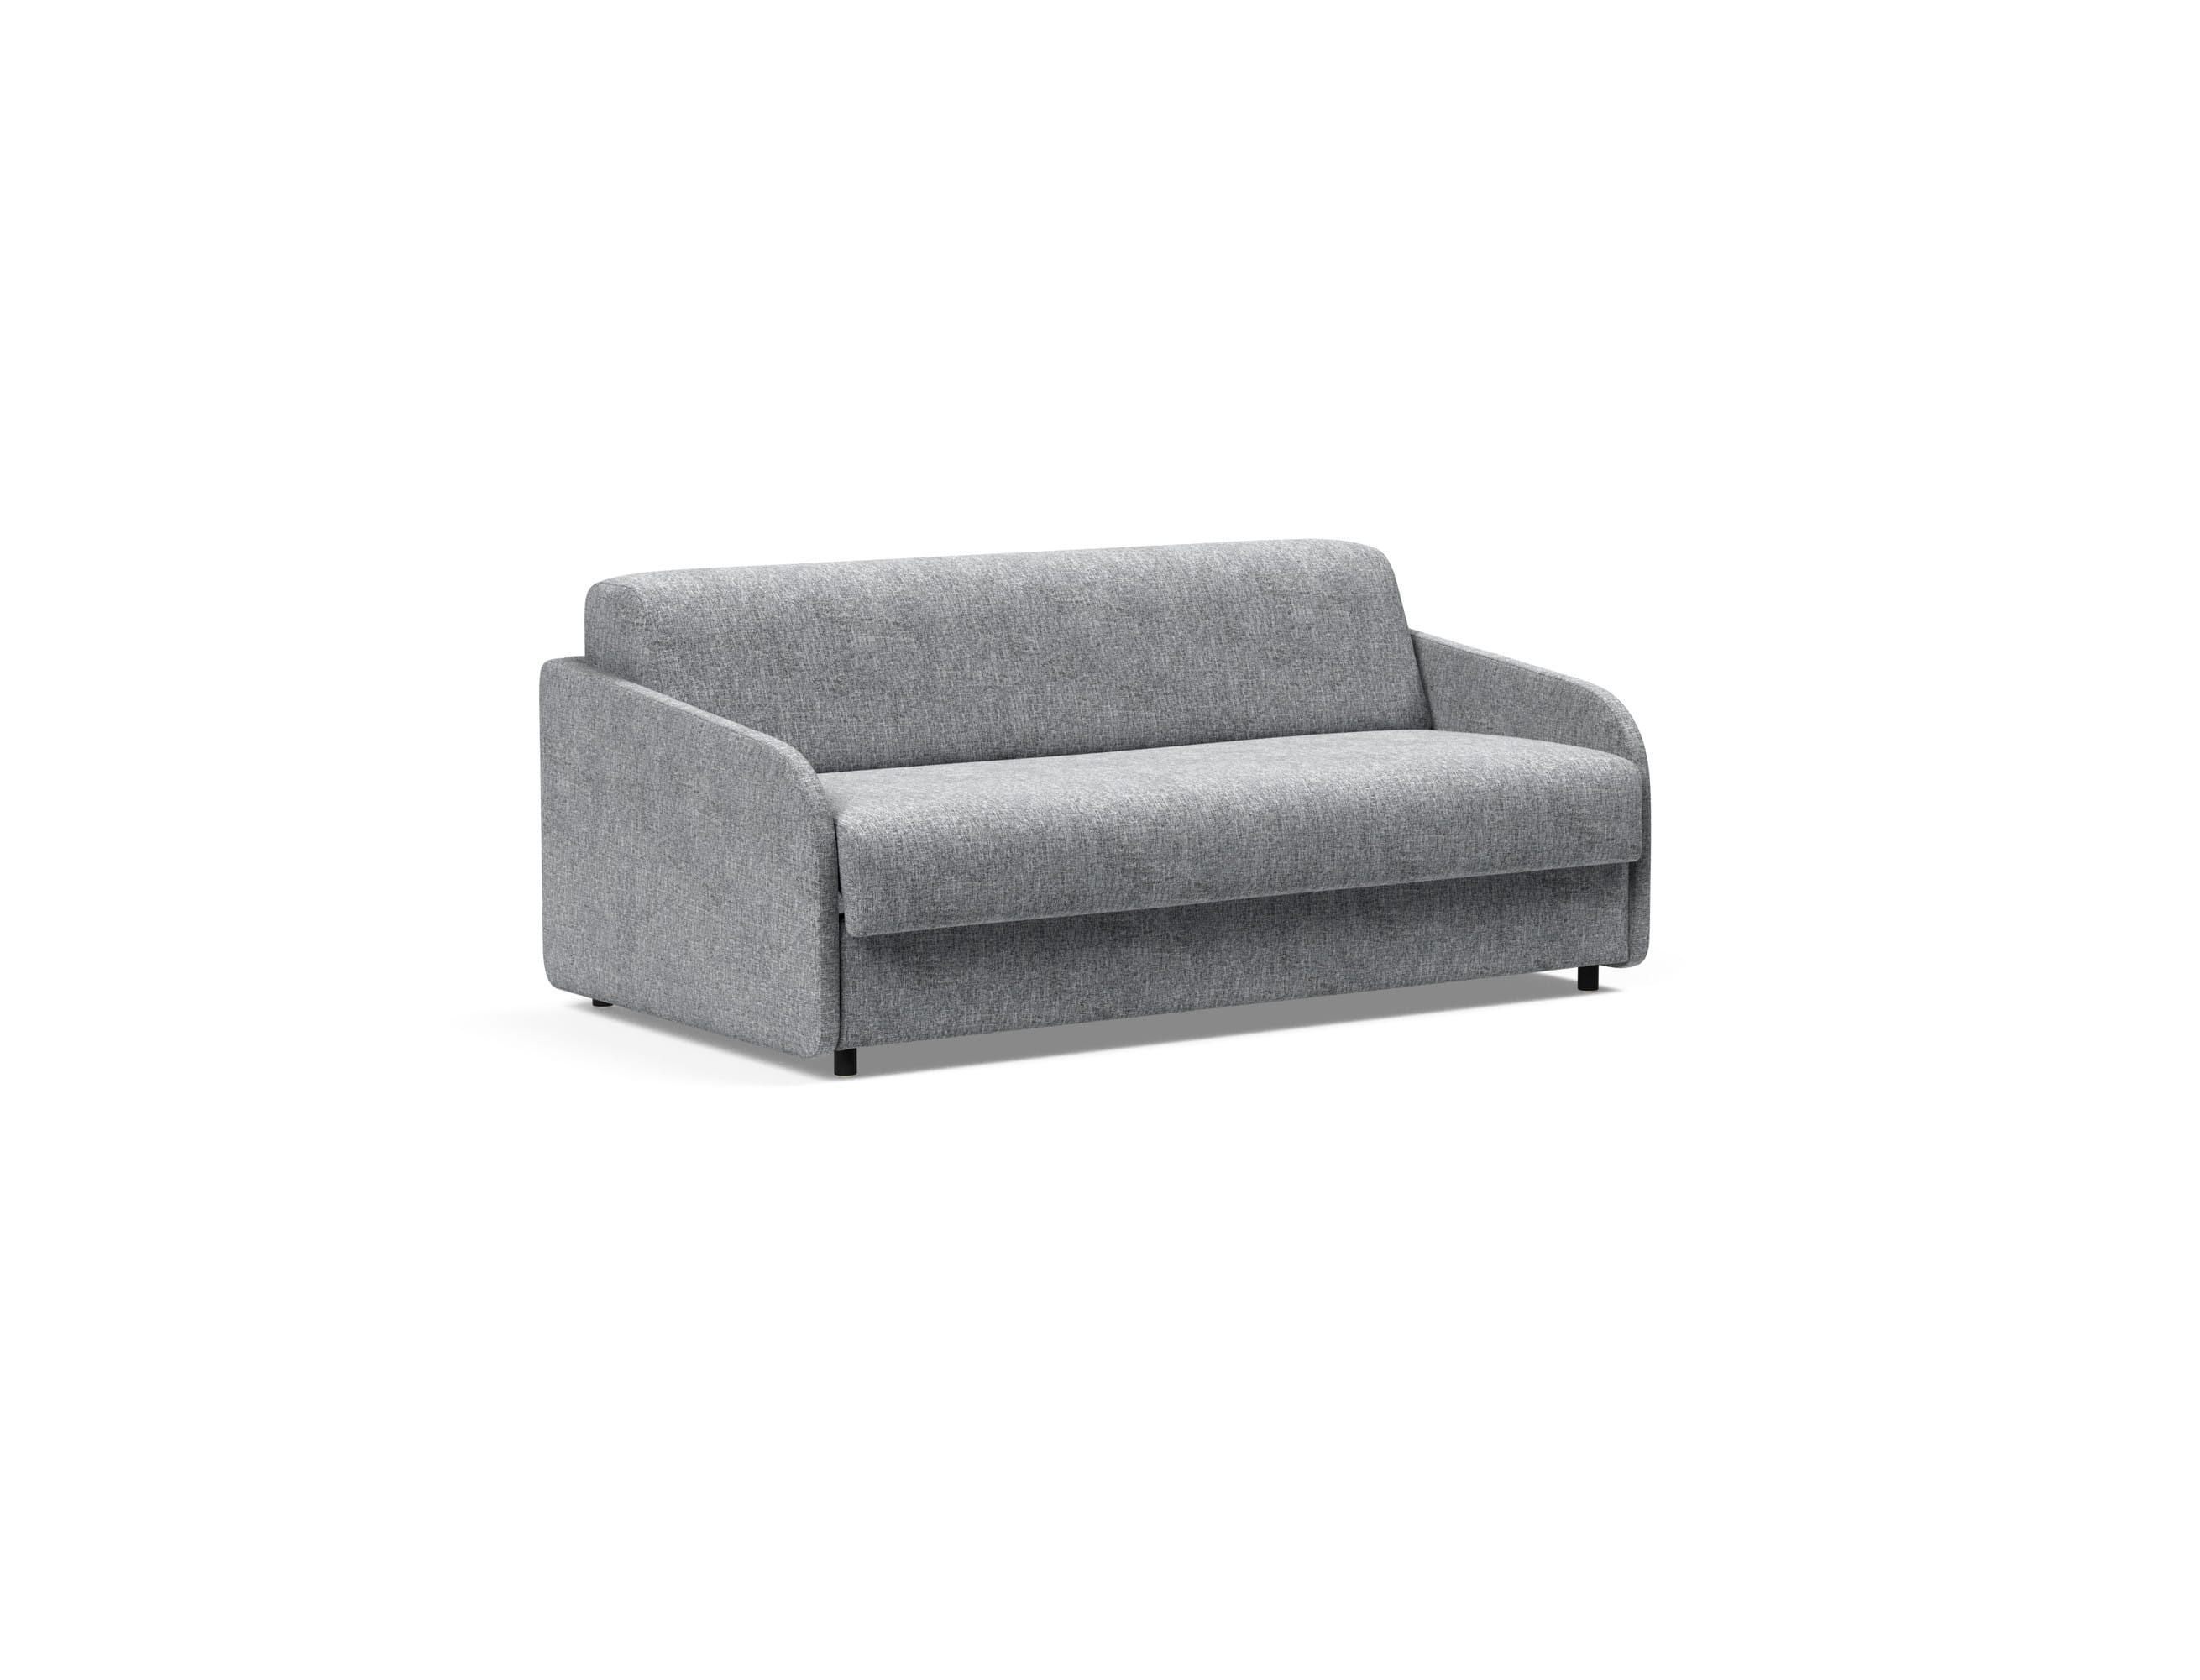 Eivor Dual Sofa Bed (Queen Size) Twist Granite by Innovation